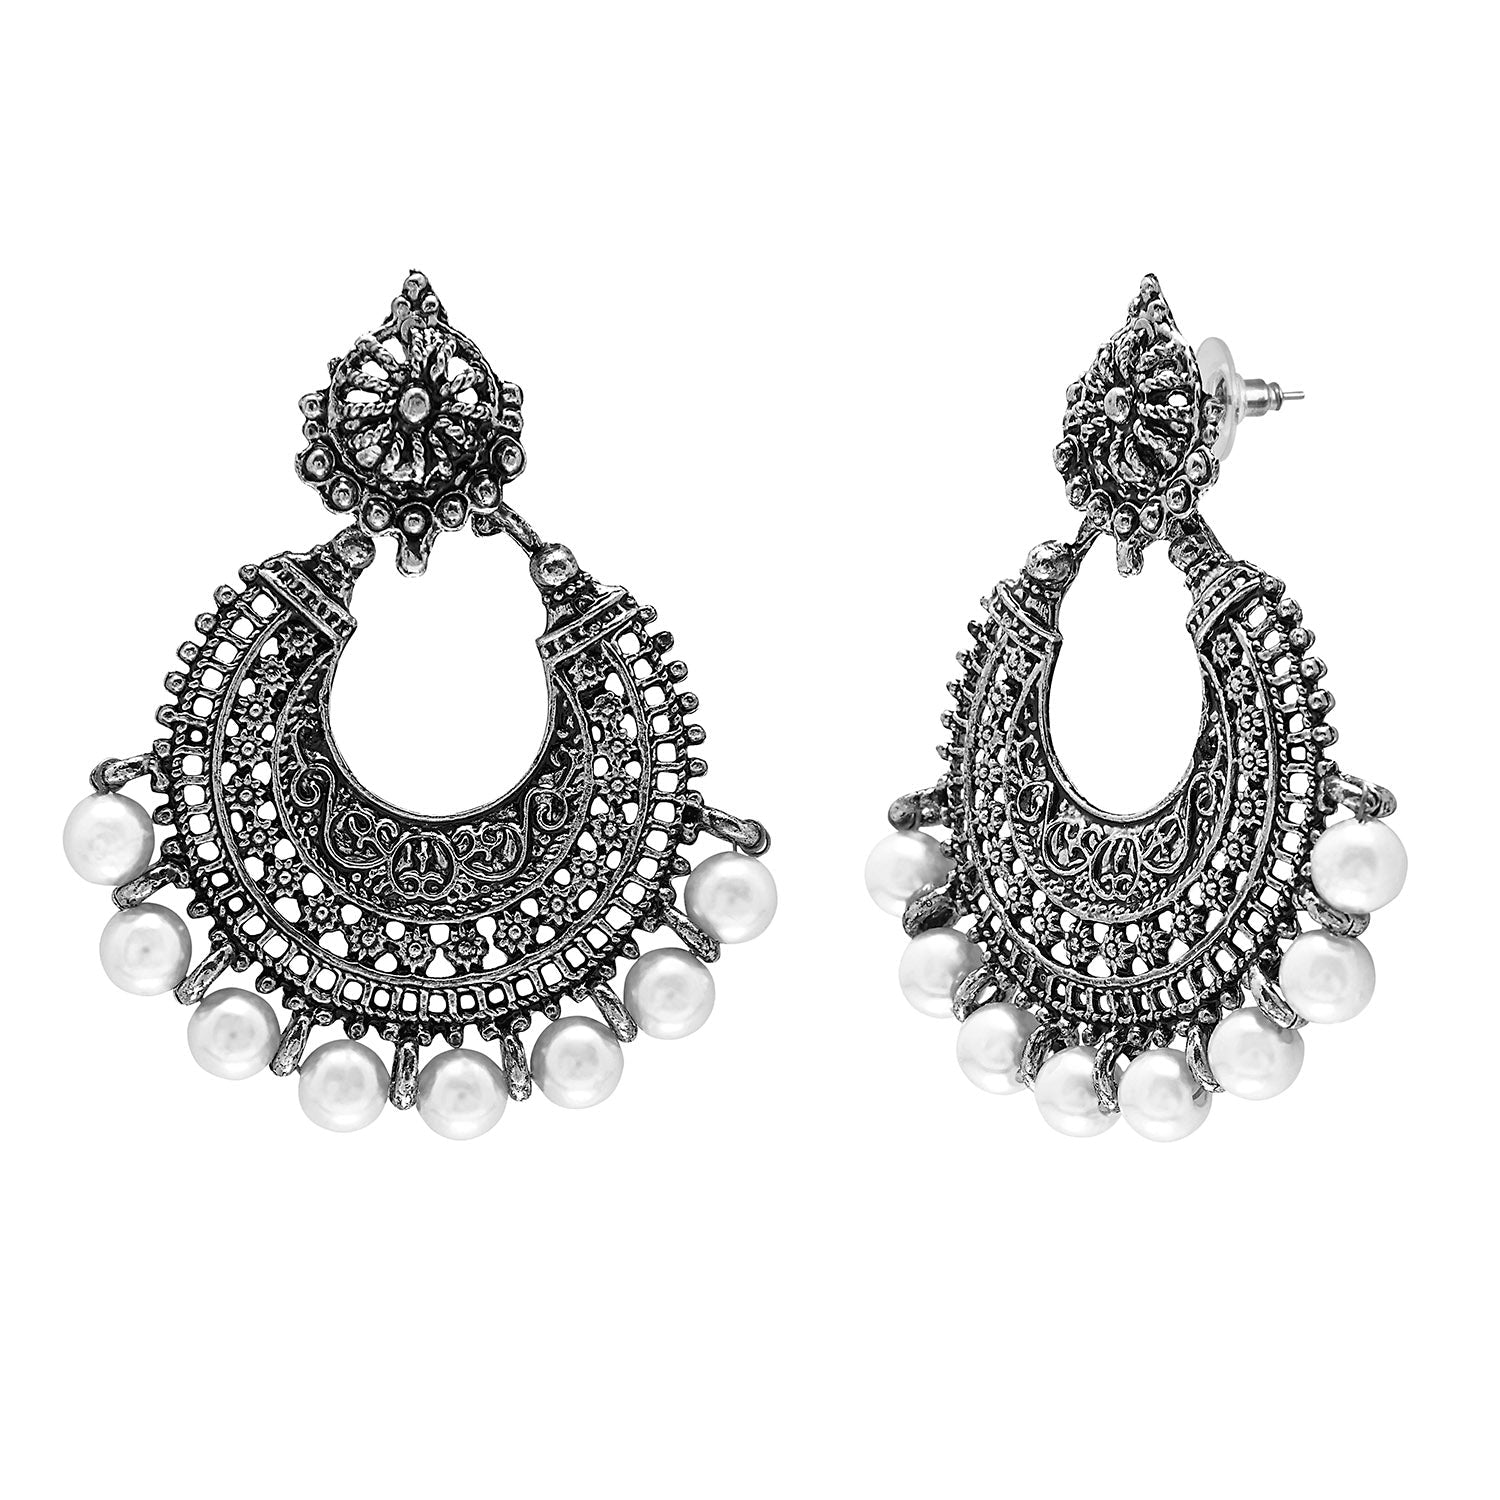 Jadau Chandbali earrings have a special... - Hyderabadi Zever | Facebook